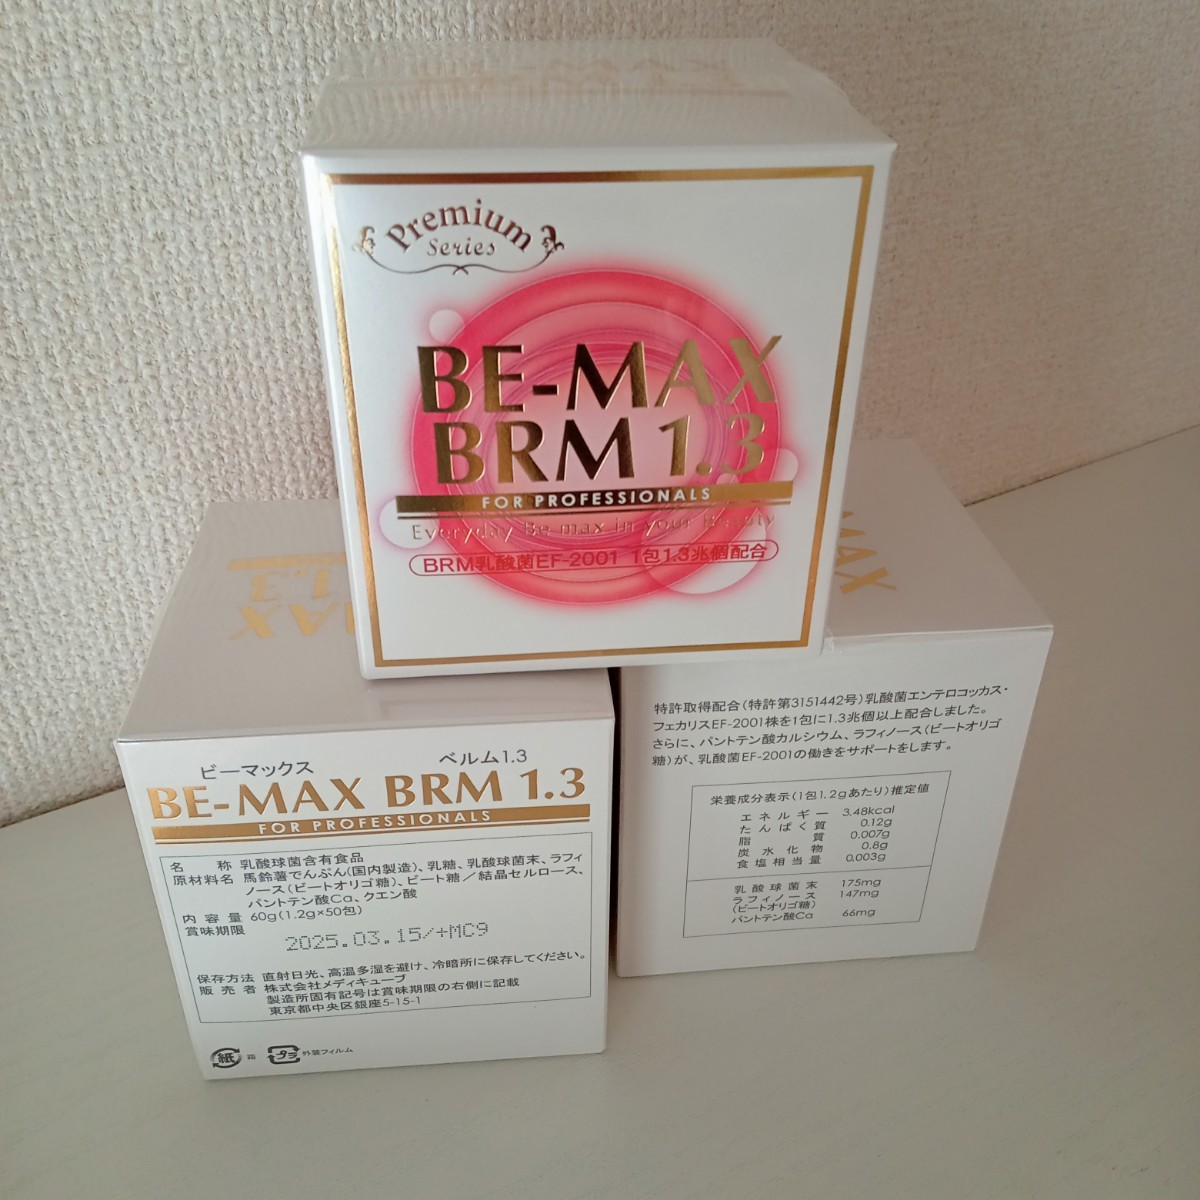 BE-MAX BRM 1.3 (ビーマックス ベルム1.3) 3箱分 ●送料無料●の画像1